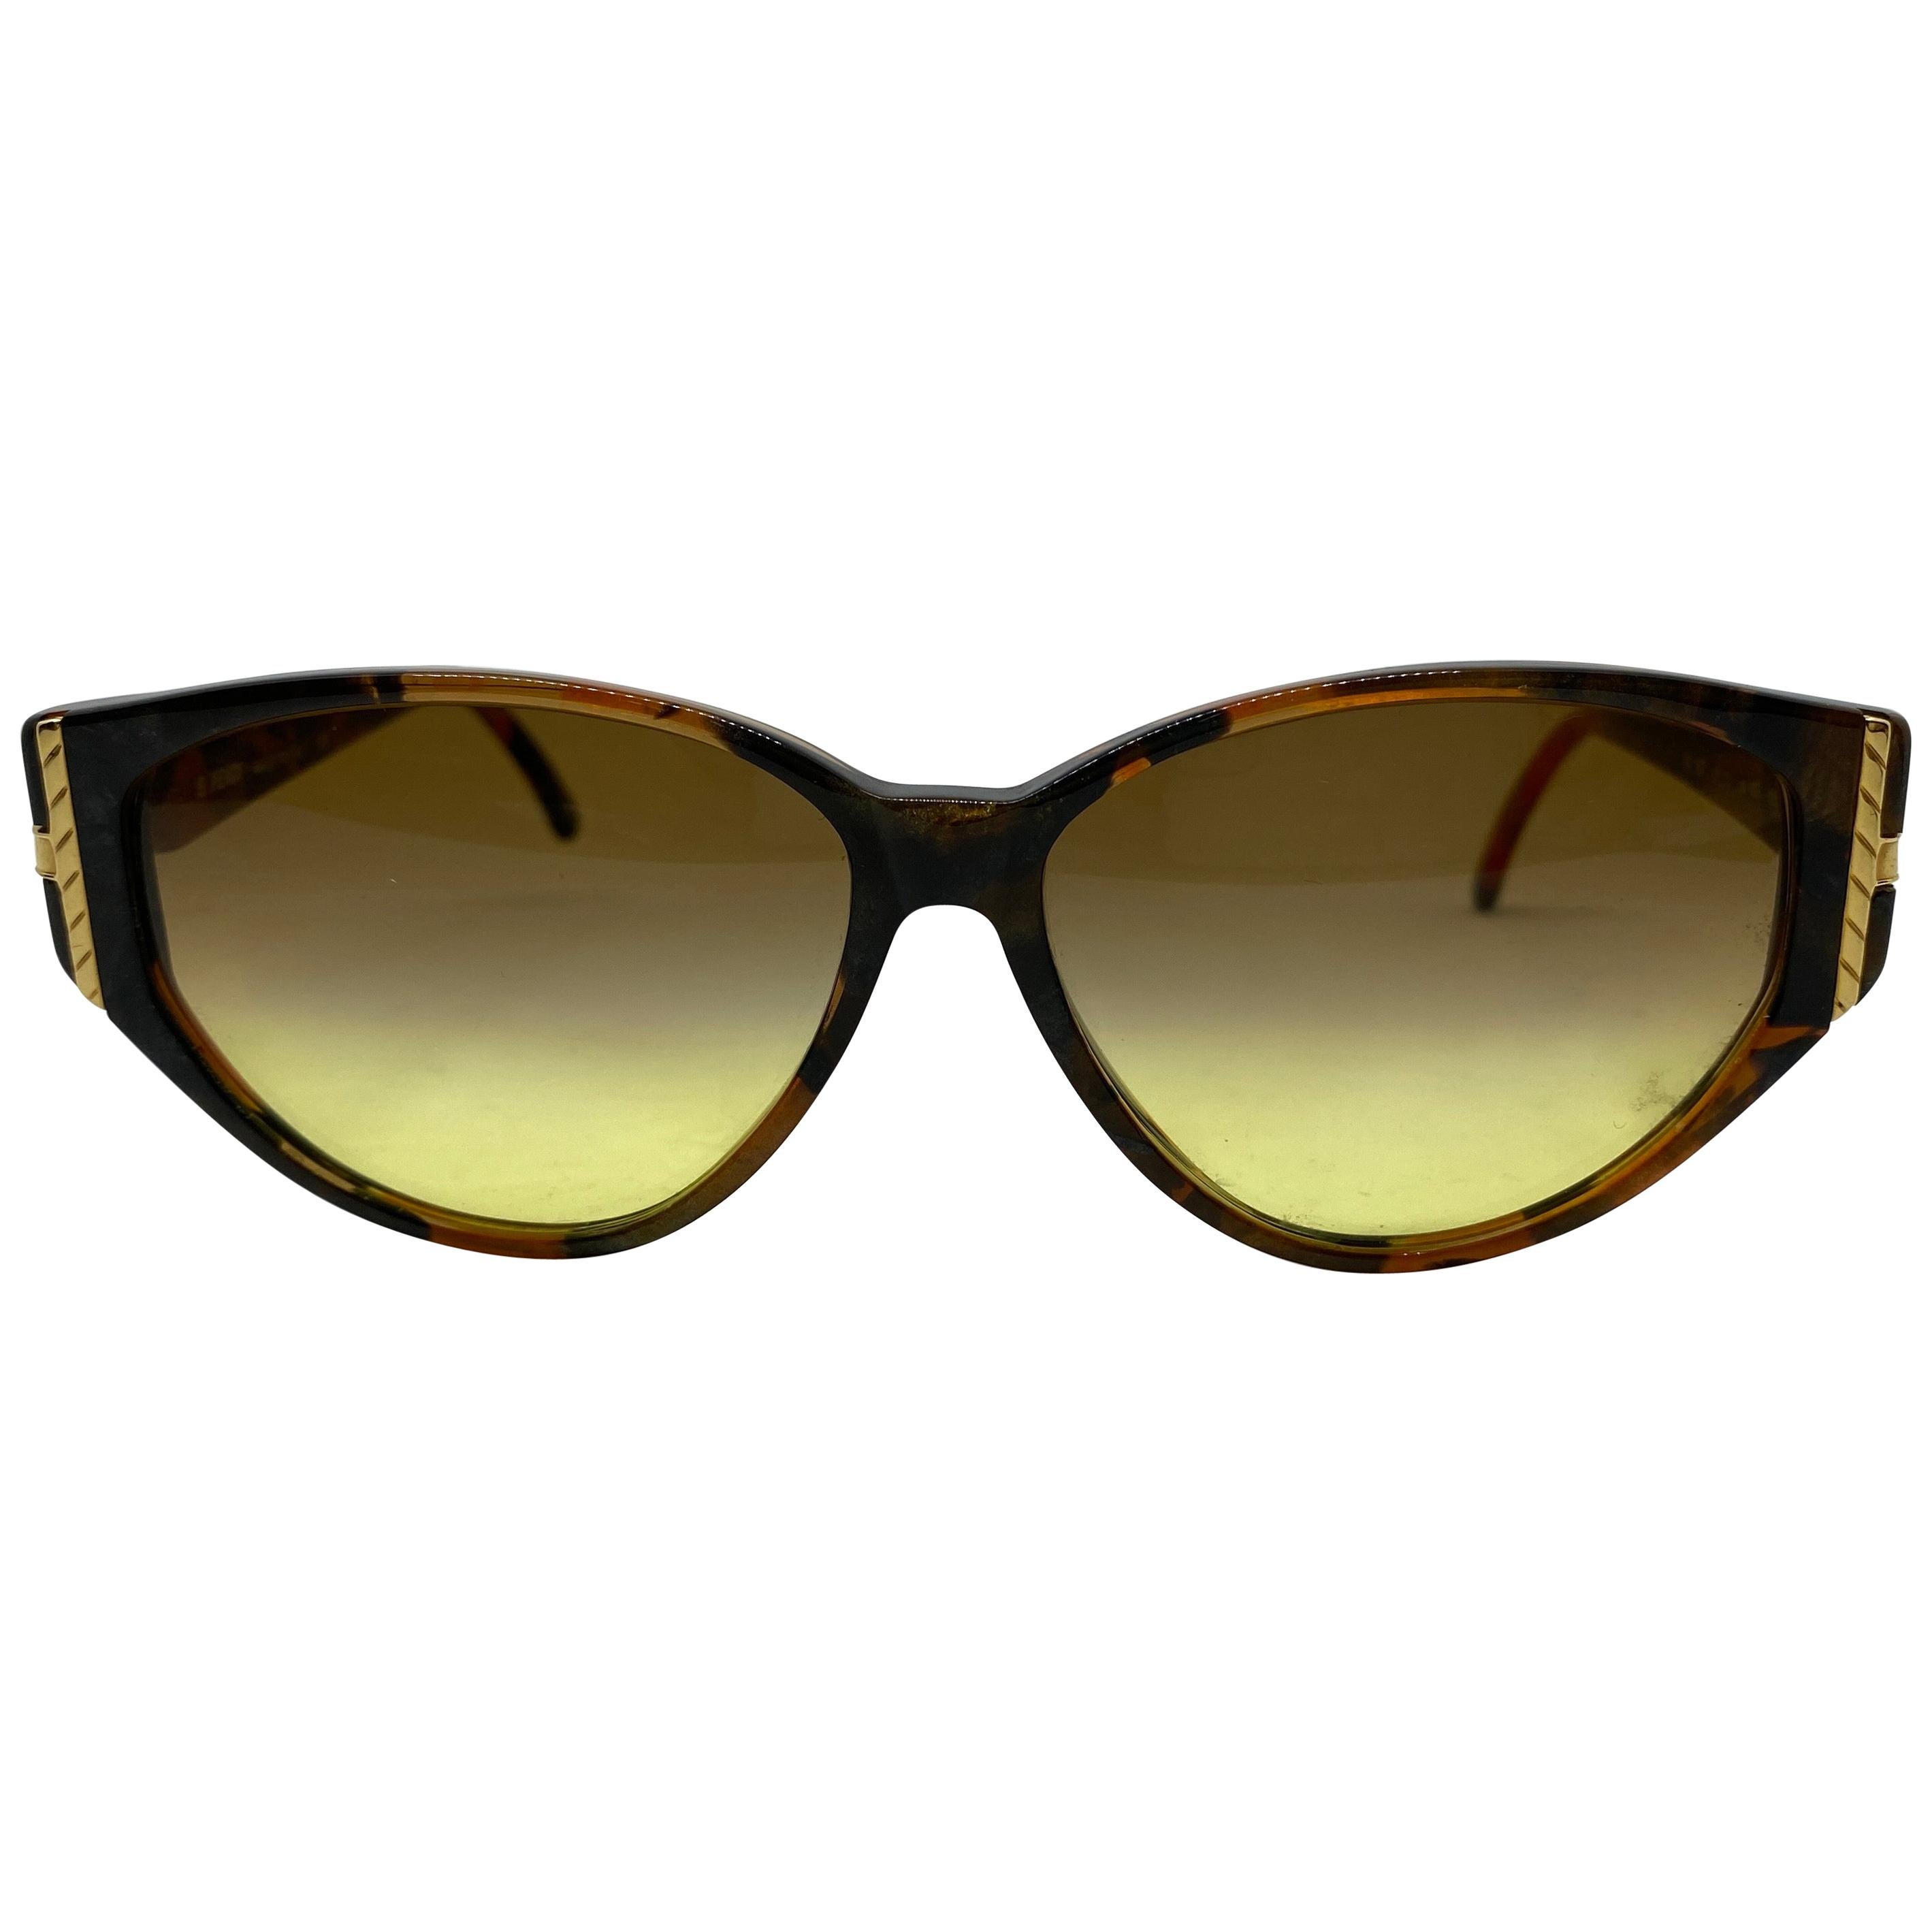 1990 Vintage Italian Fake Tortoise Lucite Sunglasses by Fendi